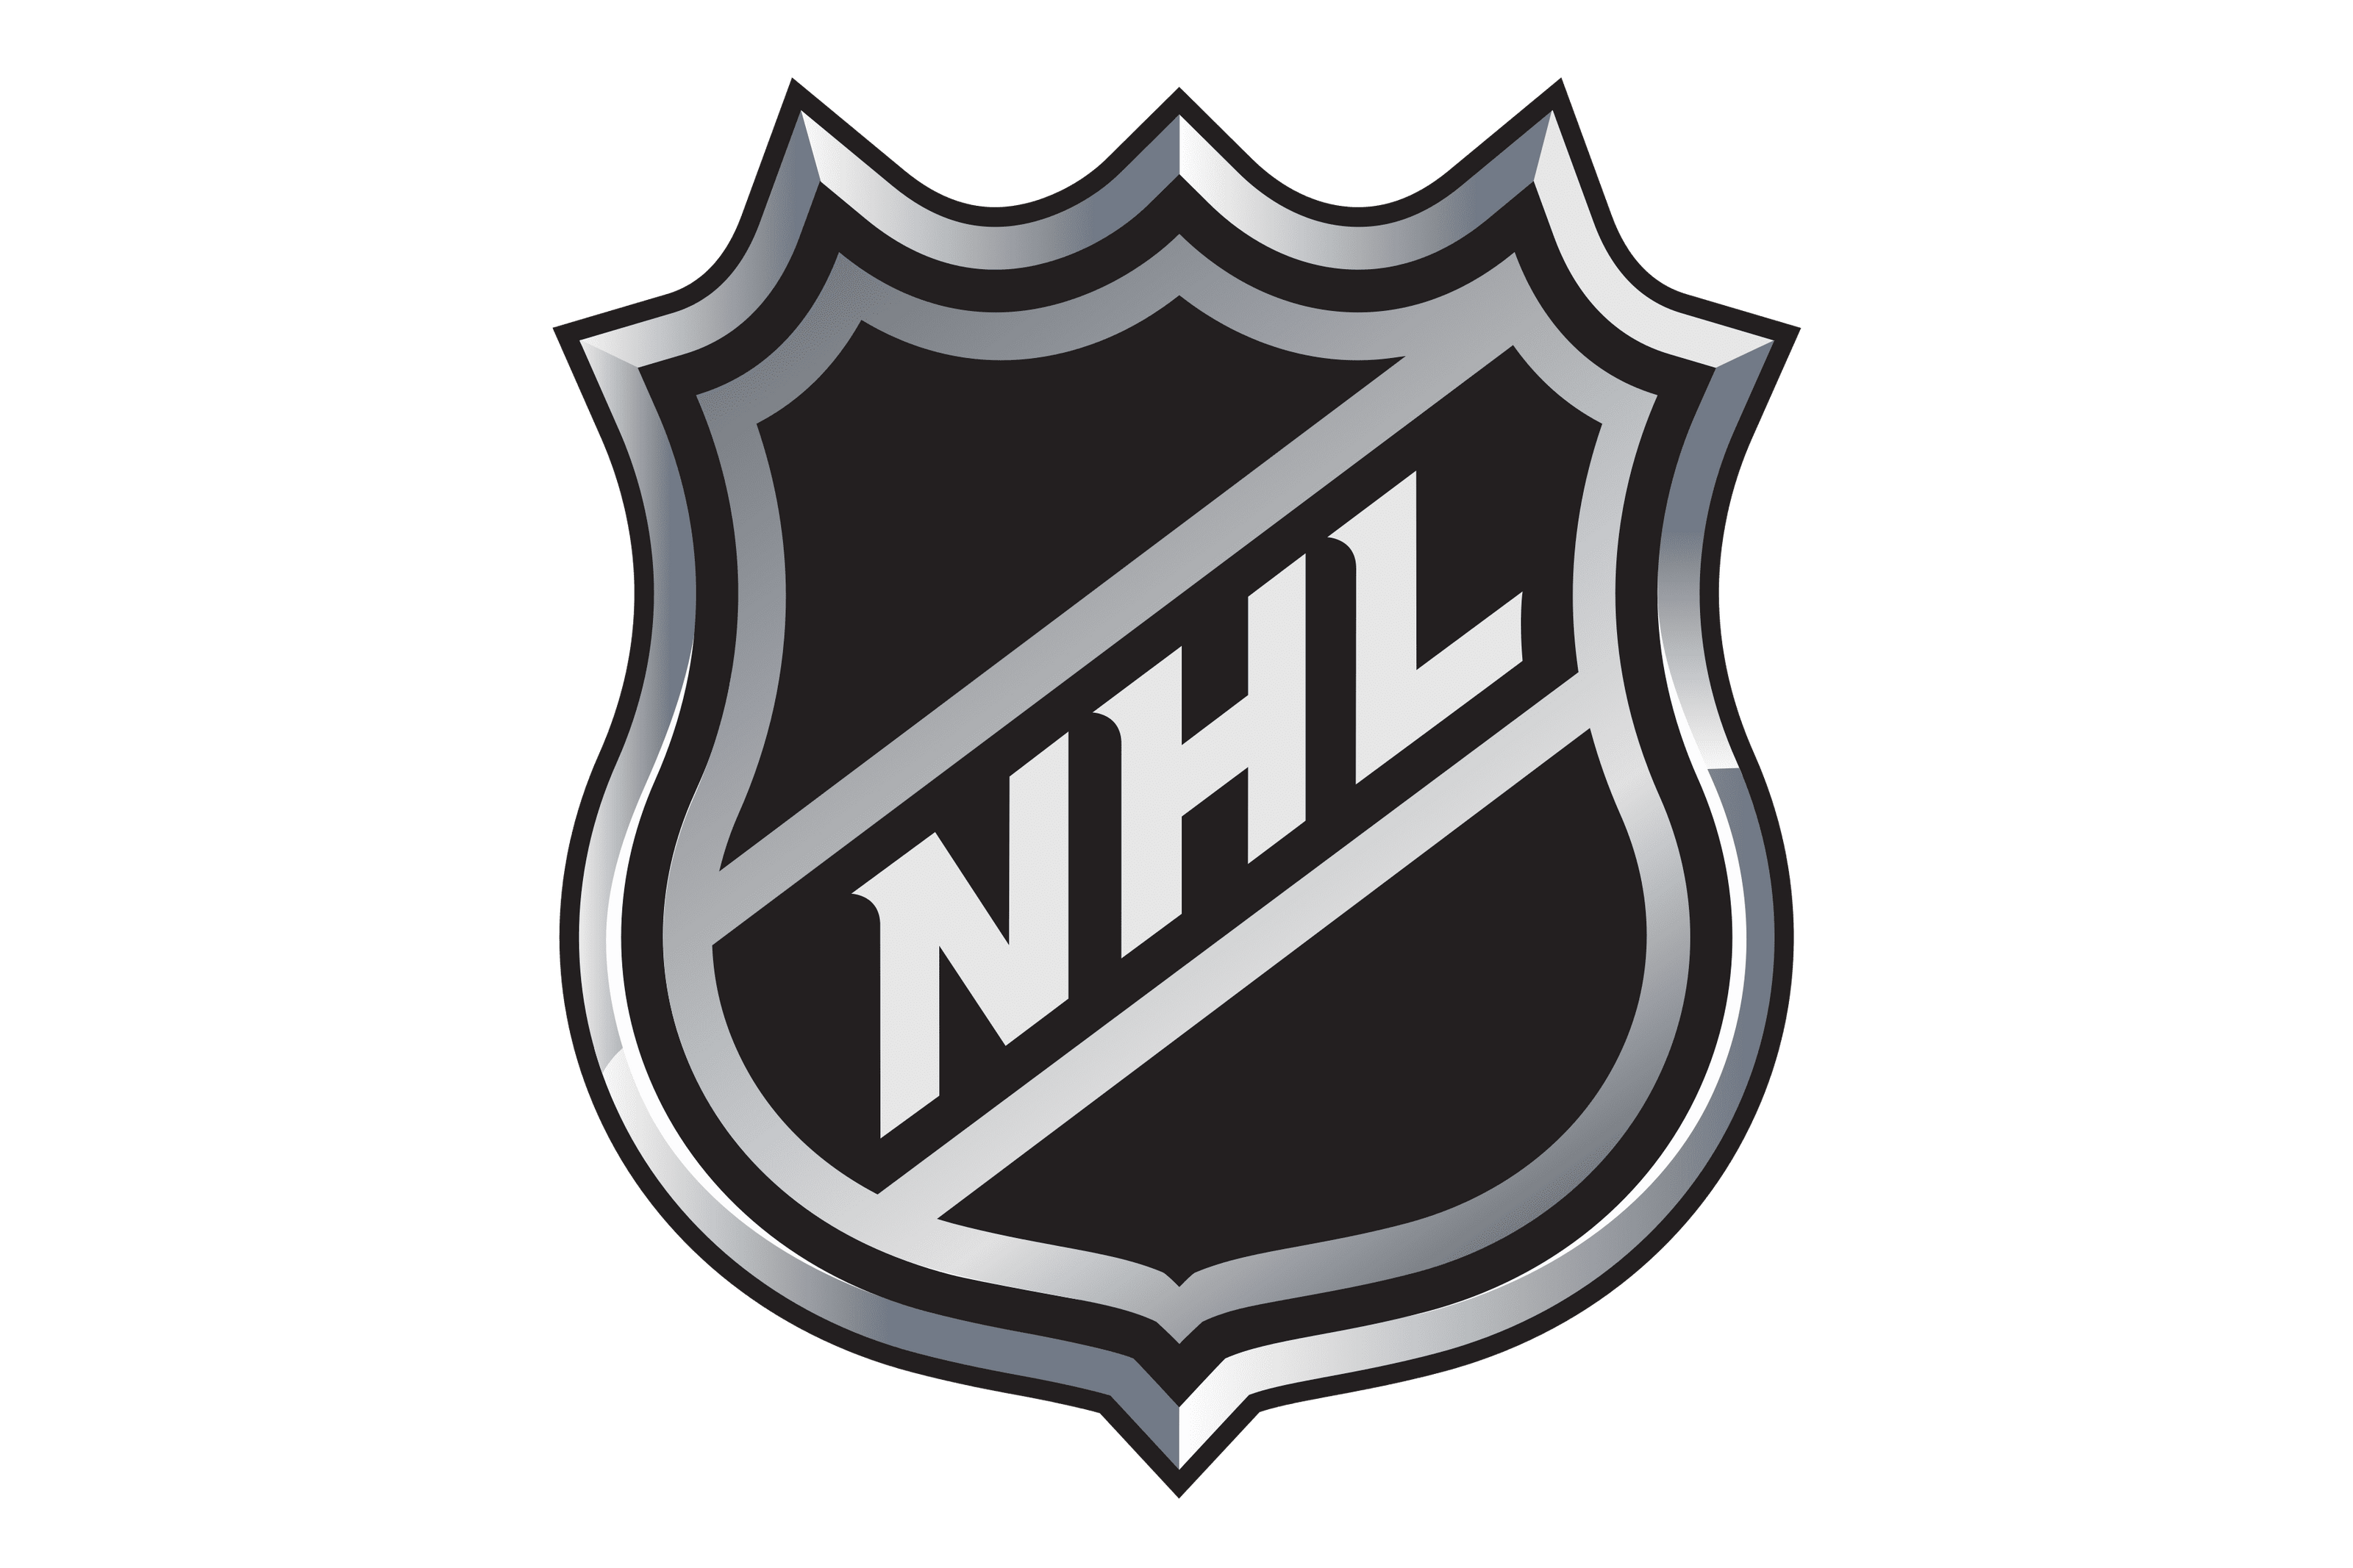 The NHL logo